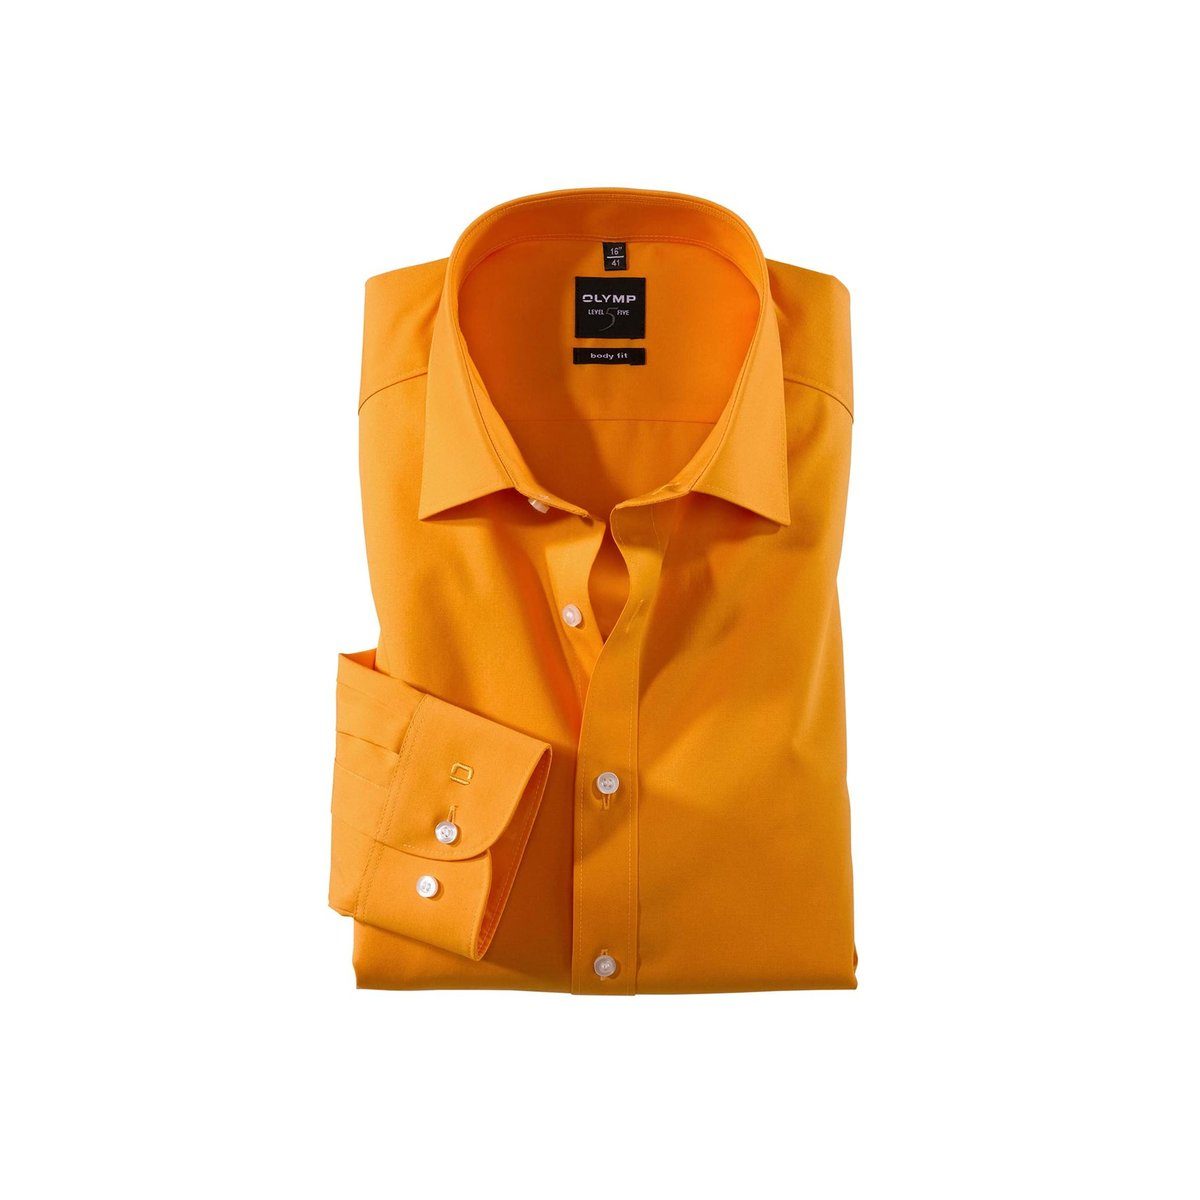 OLYMP Unterhemd orange (keine Angabe, Angabe) hellorange keine 1-St